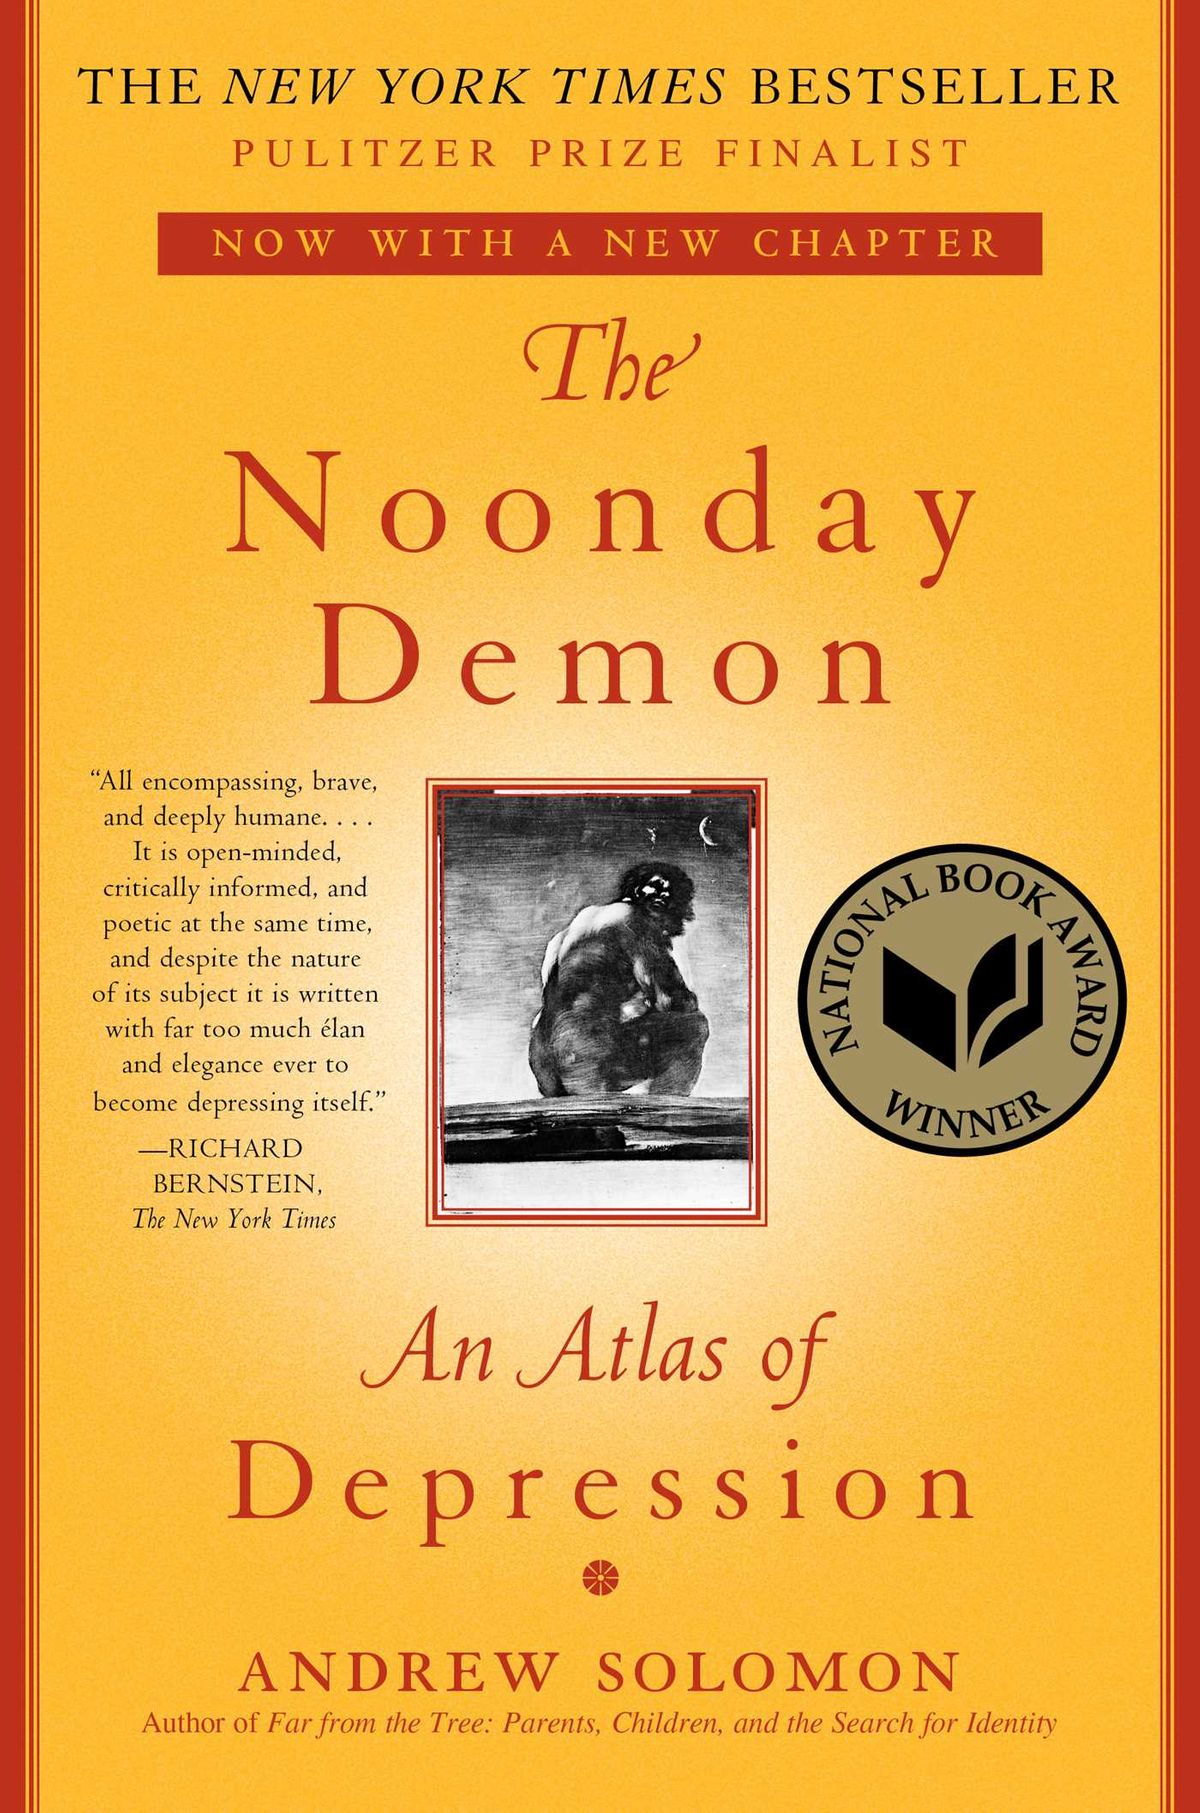 'The Noonday Demon' by Andrew Solomon